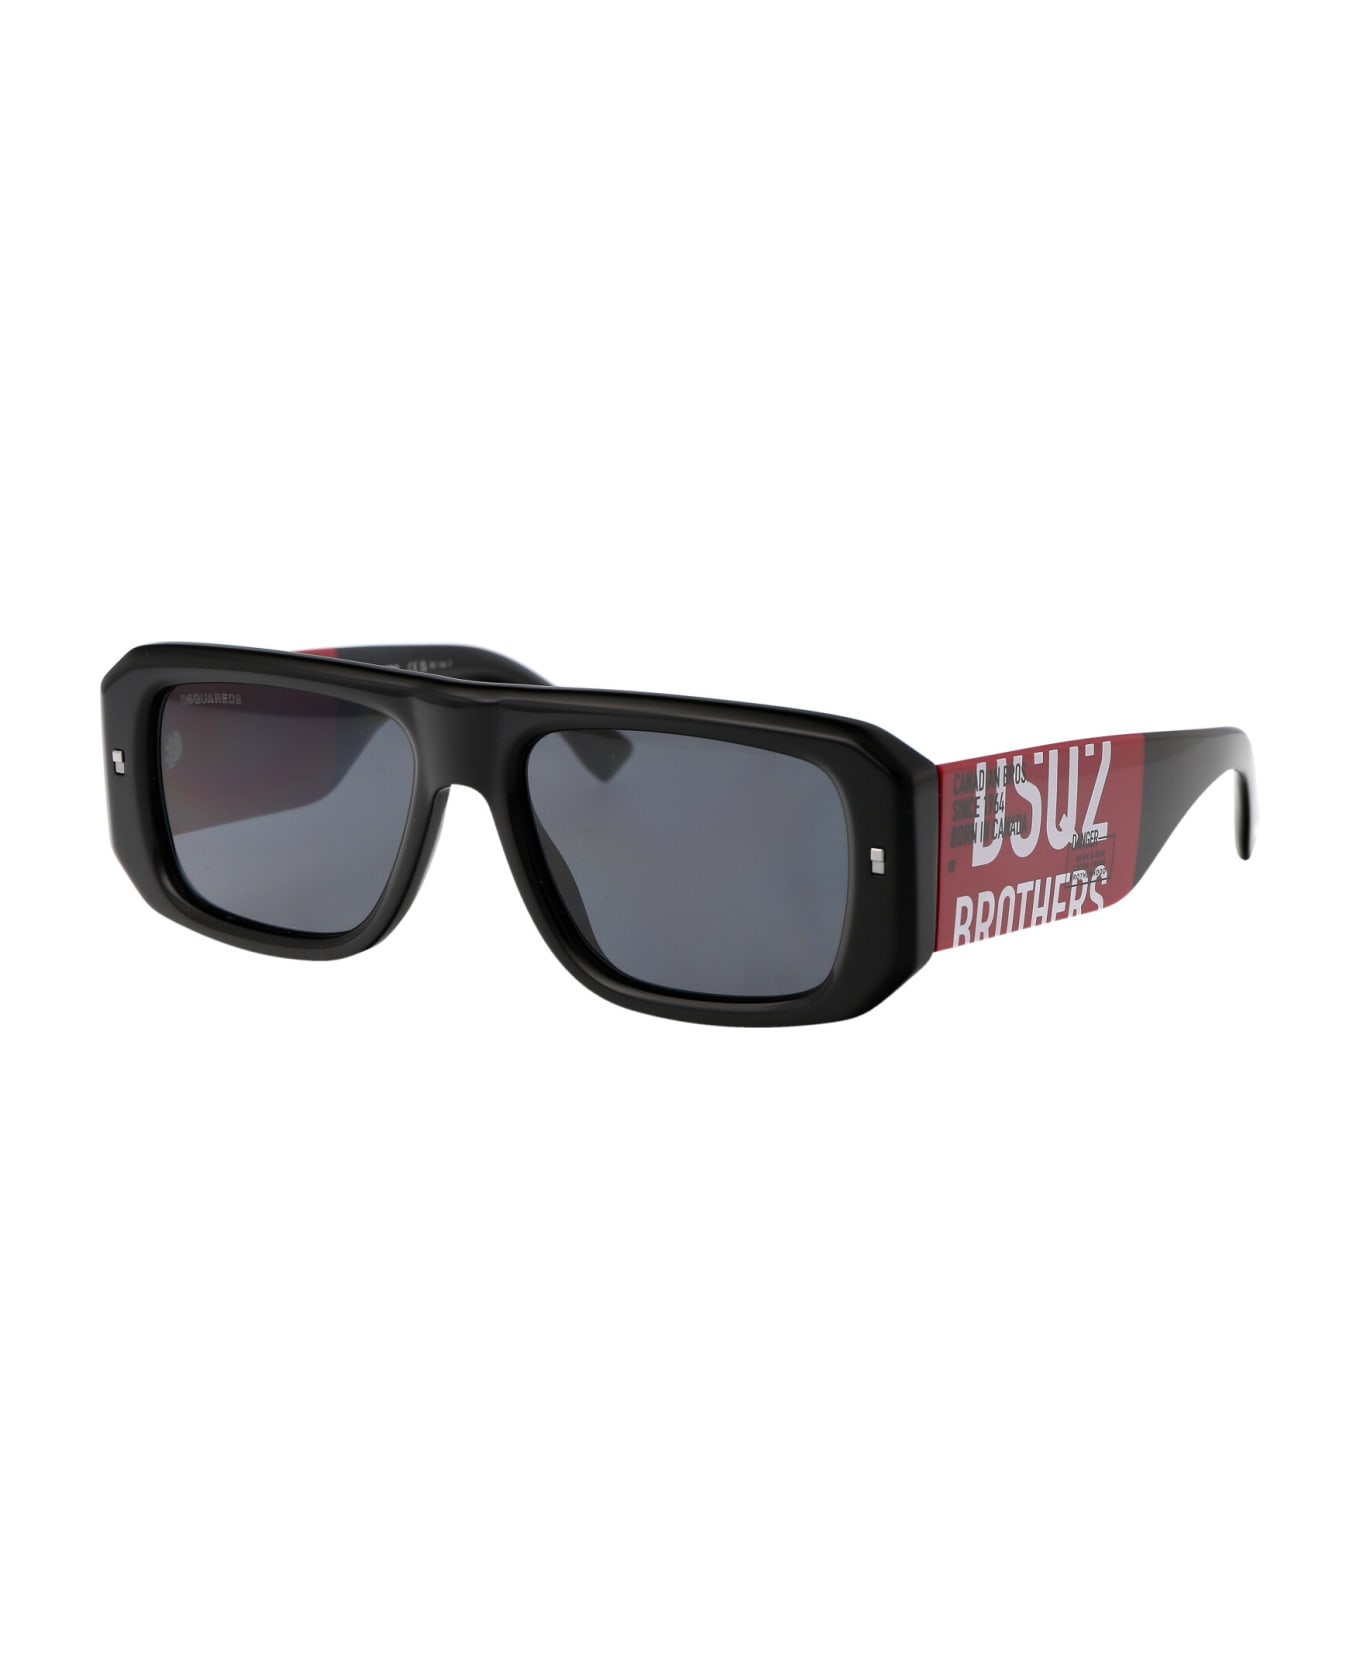 Dsquared2 Eyewear D2 0107/s Sunglasses - OITIR BLACK RED